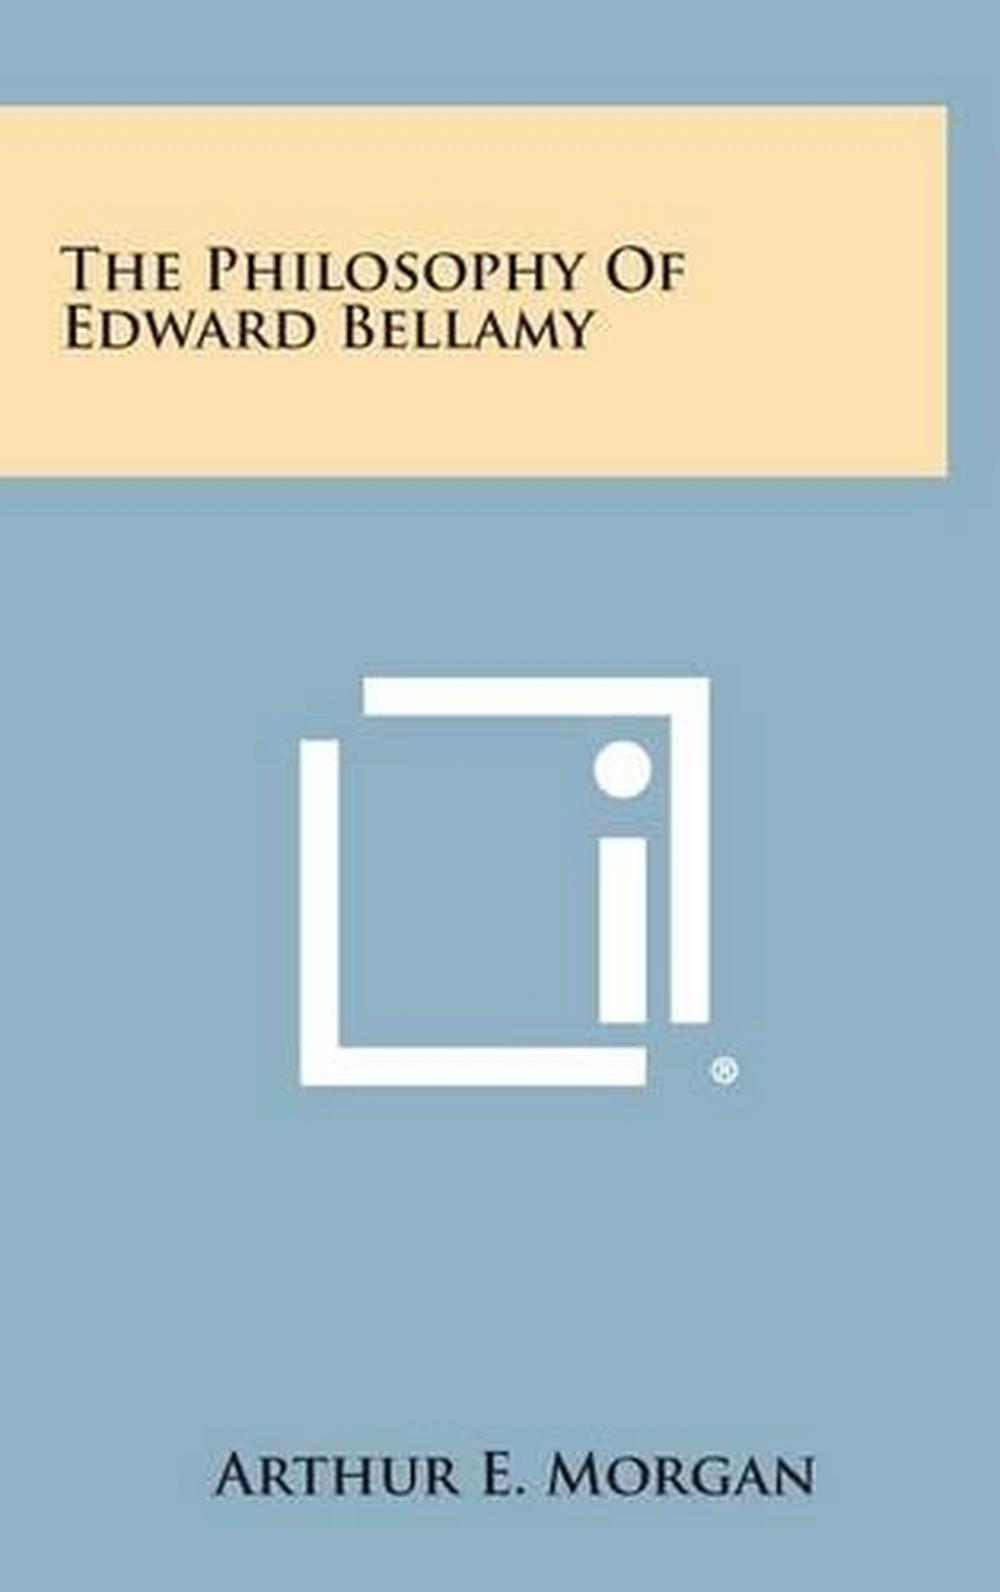 edward bellamy books